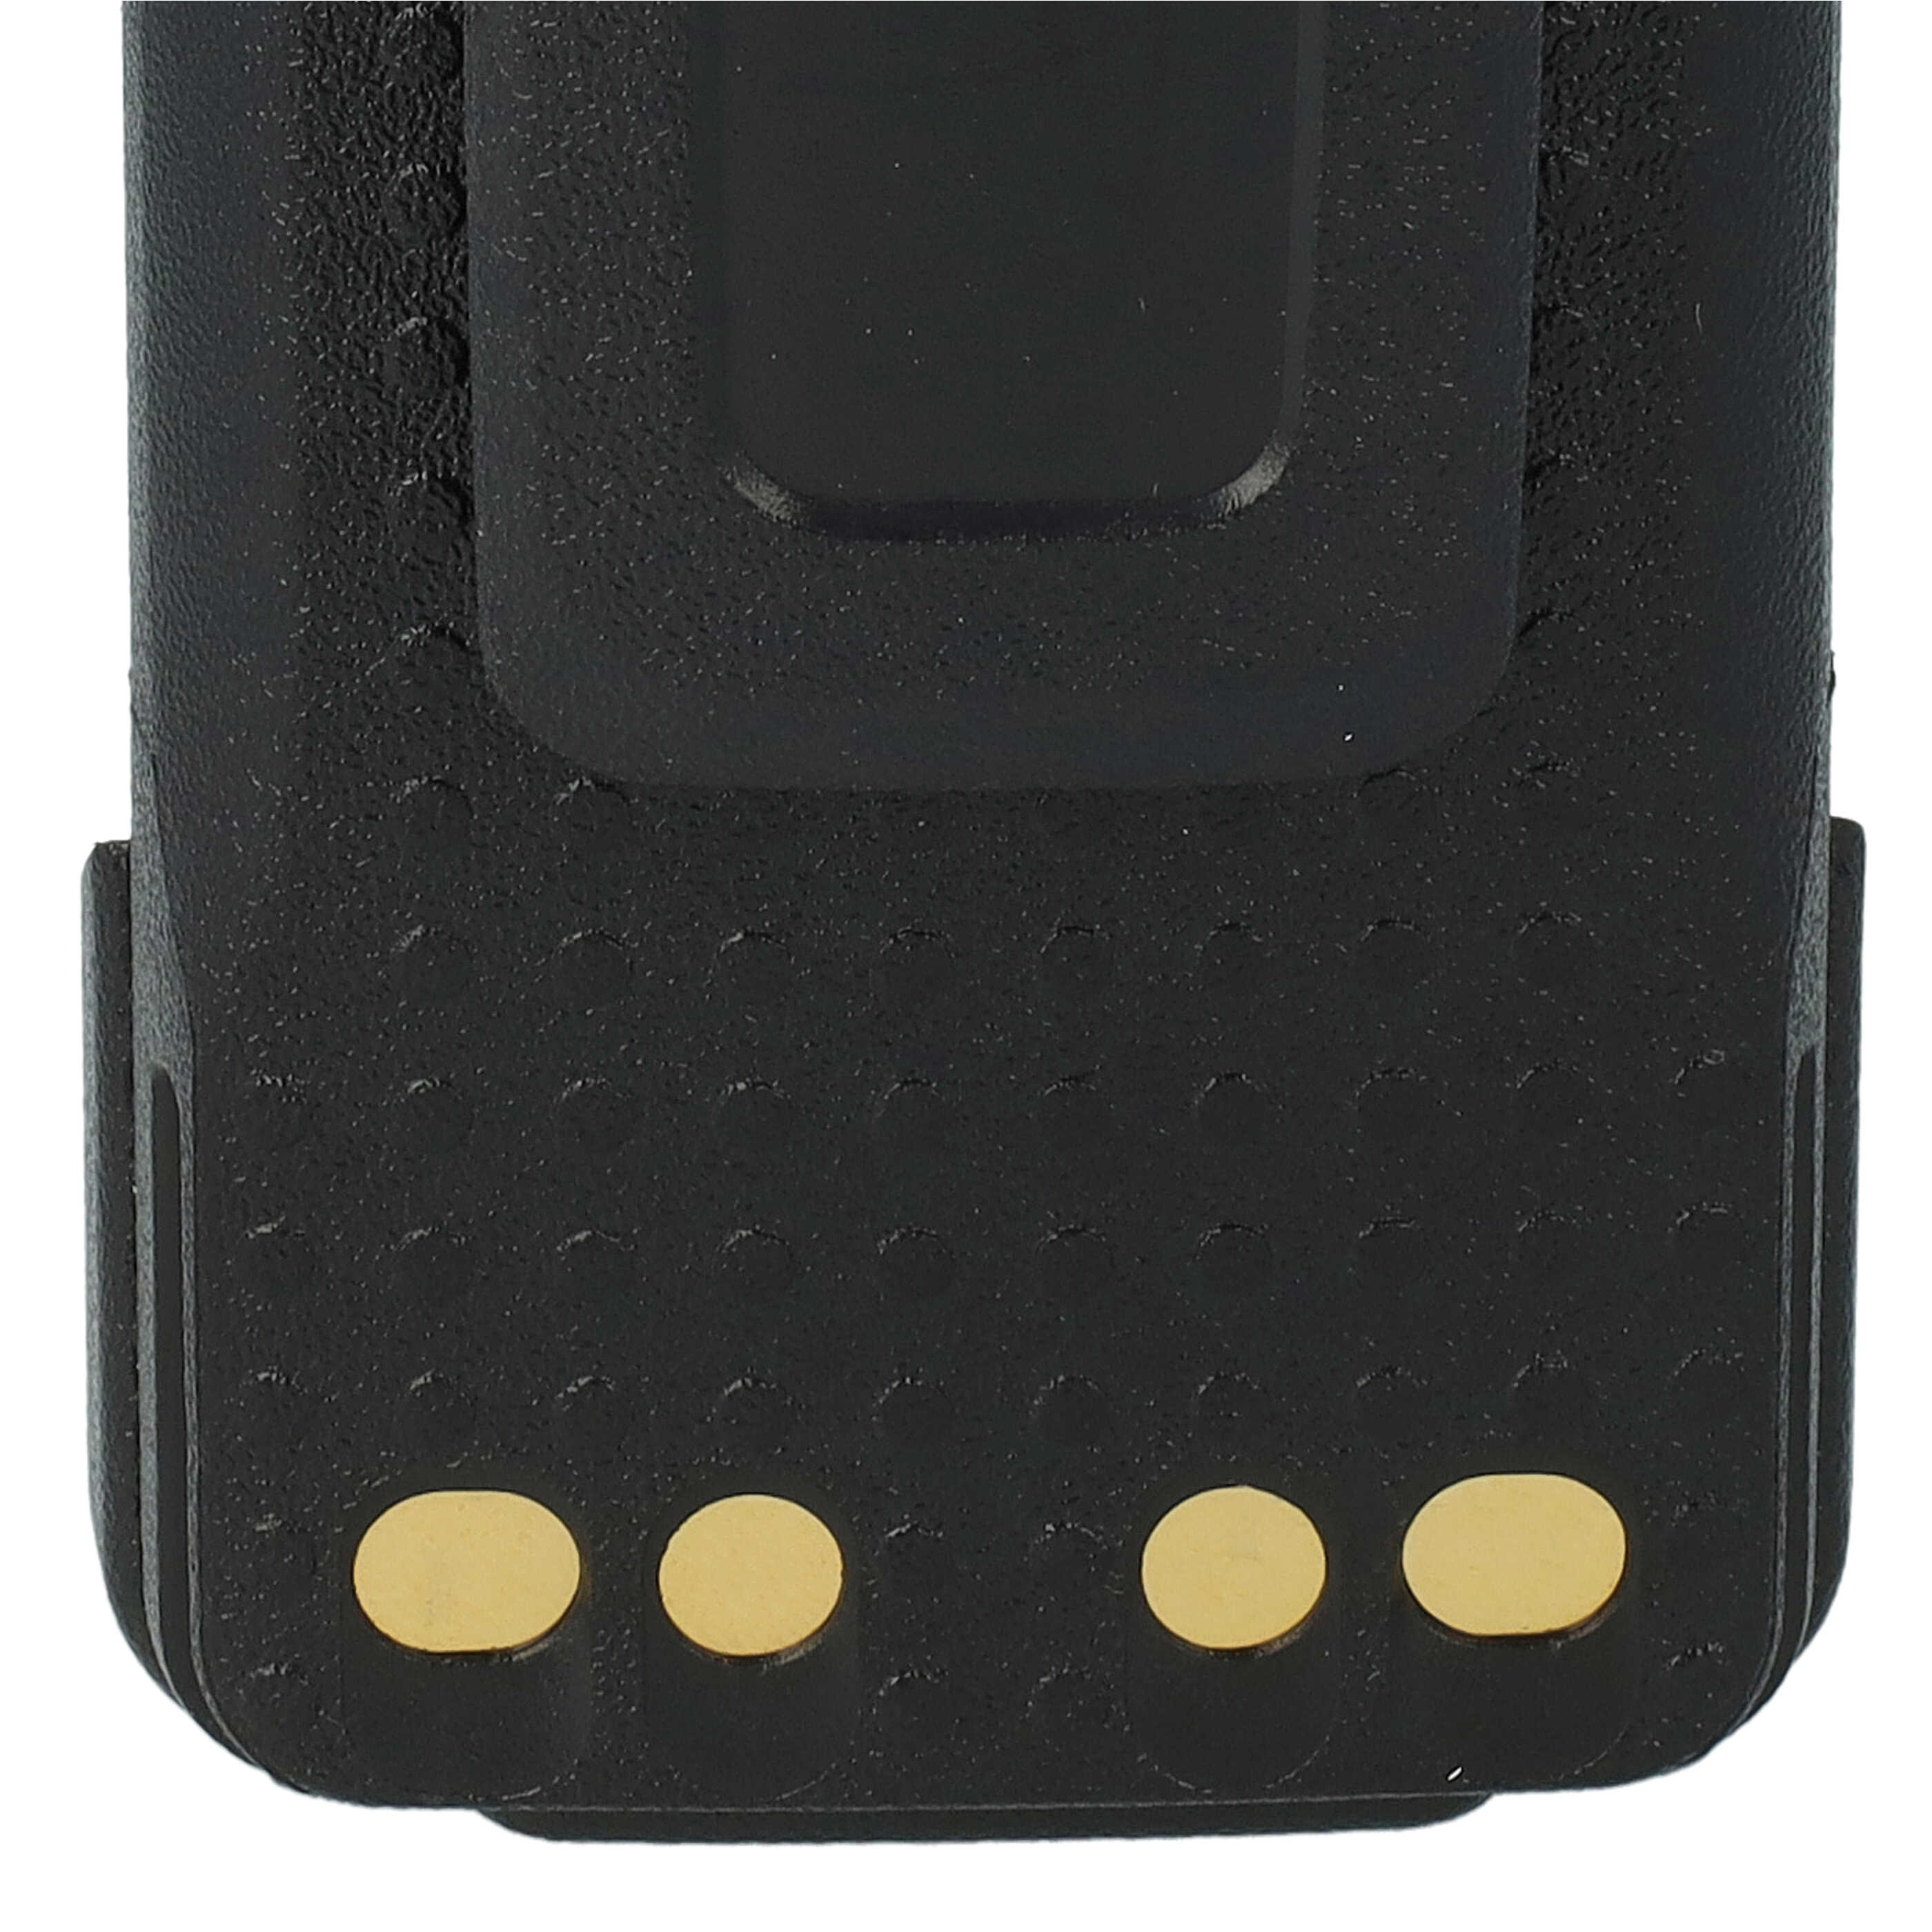 Akumulator do radiotelefonu zamiennik Motorola PMNN4415, PMNN441 - 3000 mAh 7,2 V Li-Ion + klips na pasek